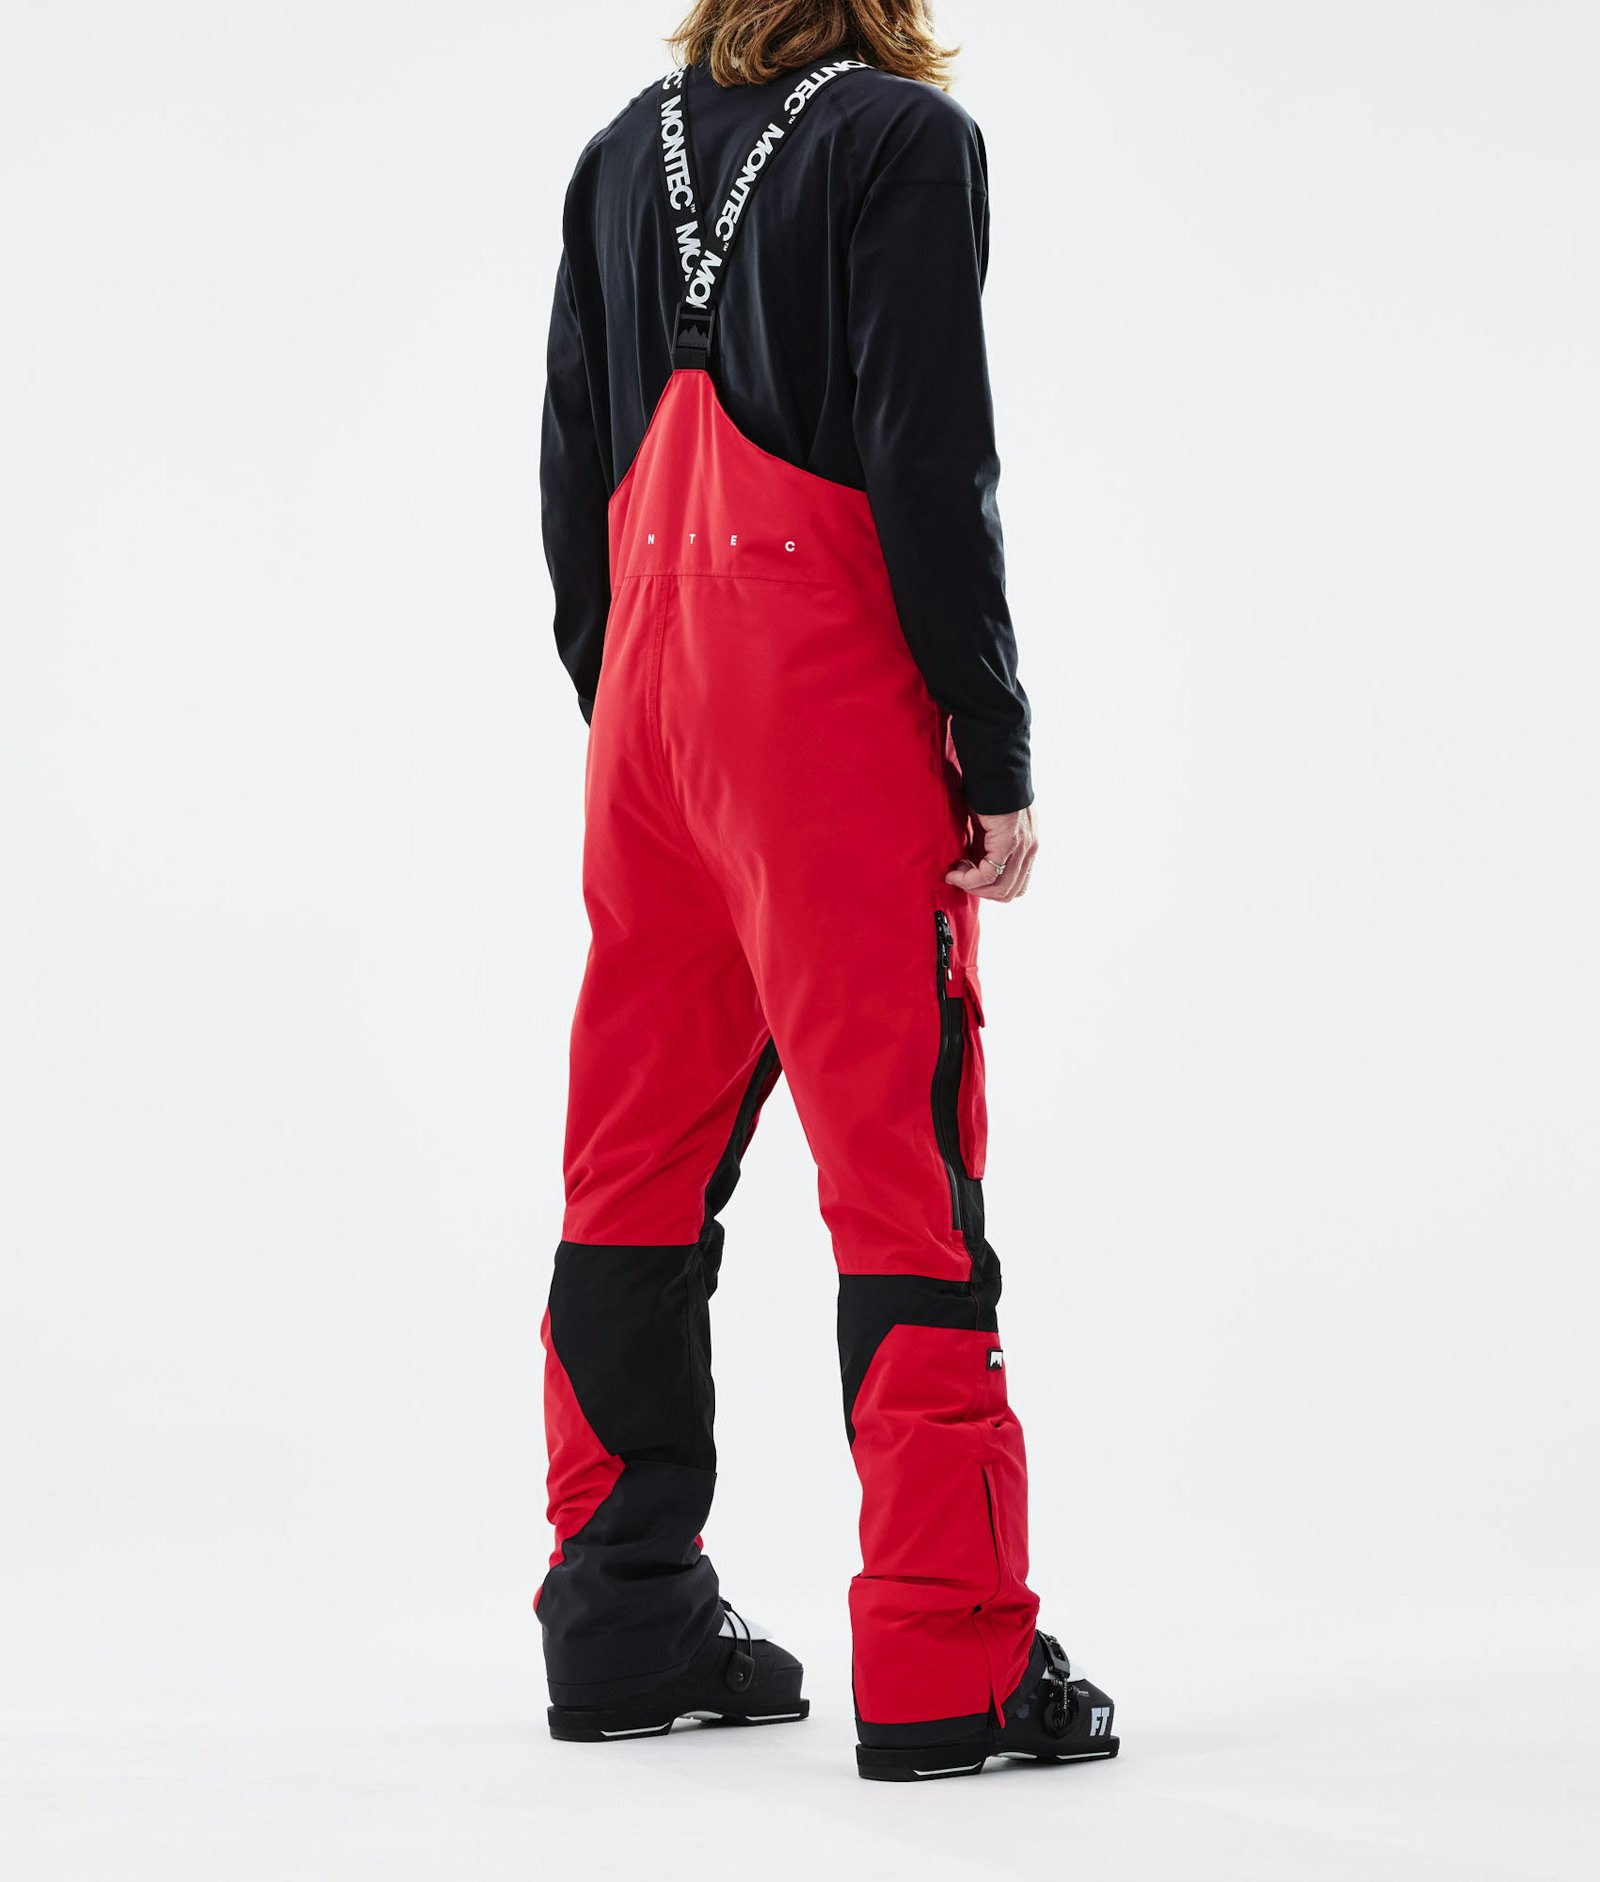 Fawk 2021 Pantaloni Sci Uomo Red/Black